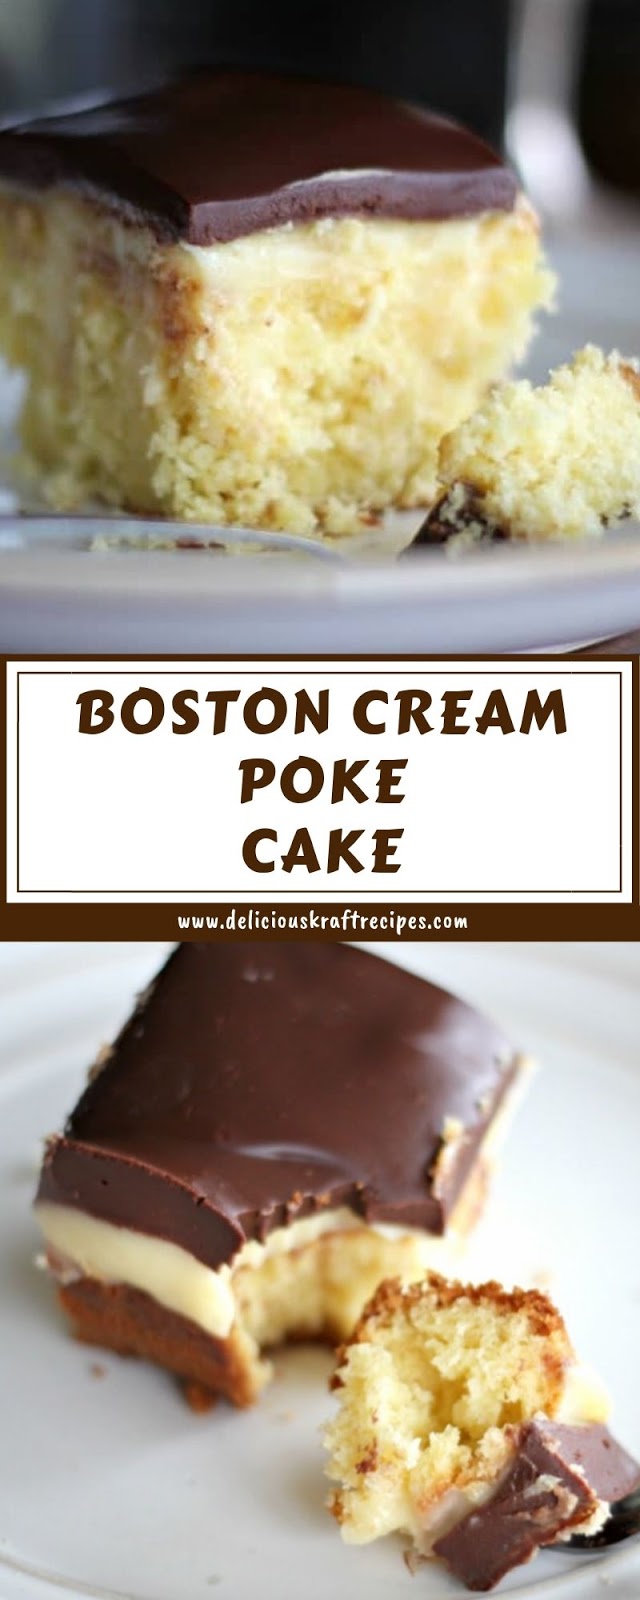 BOSTON CREAM POKE CAKE